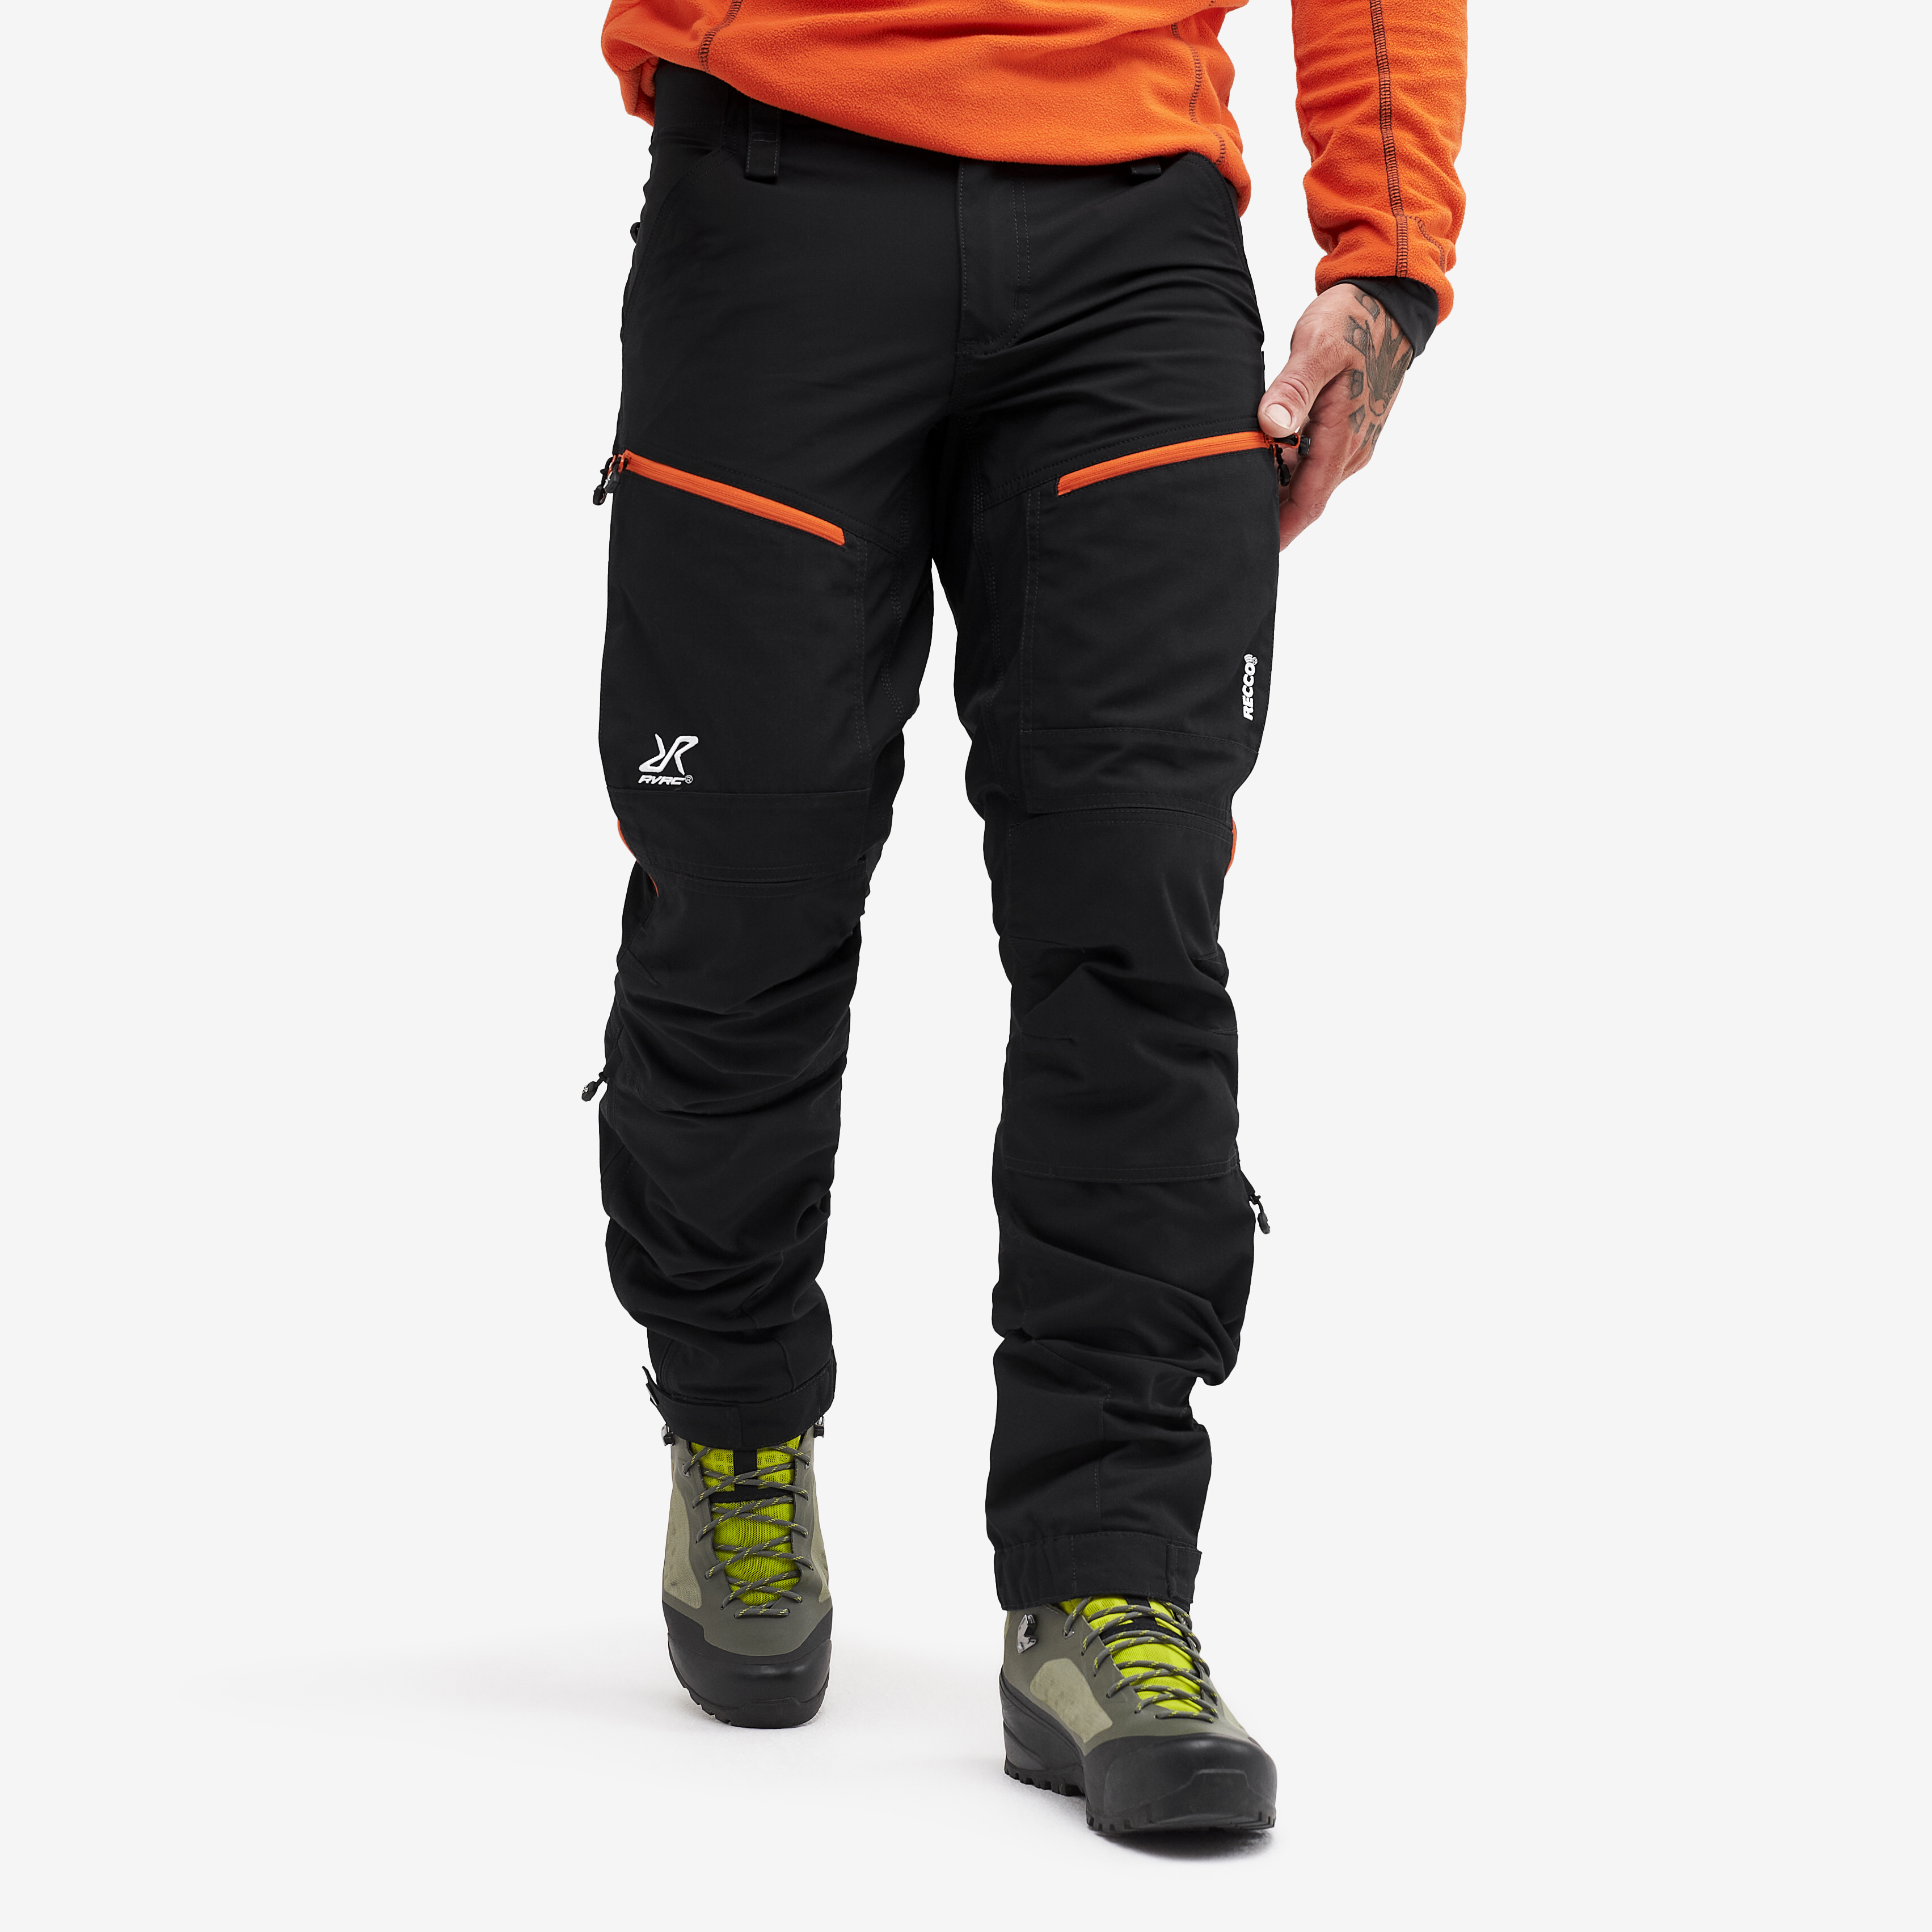 RVRC GP Pro Rescue Pants Black/Orange 2.0 Miehet